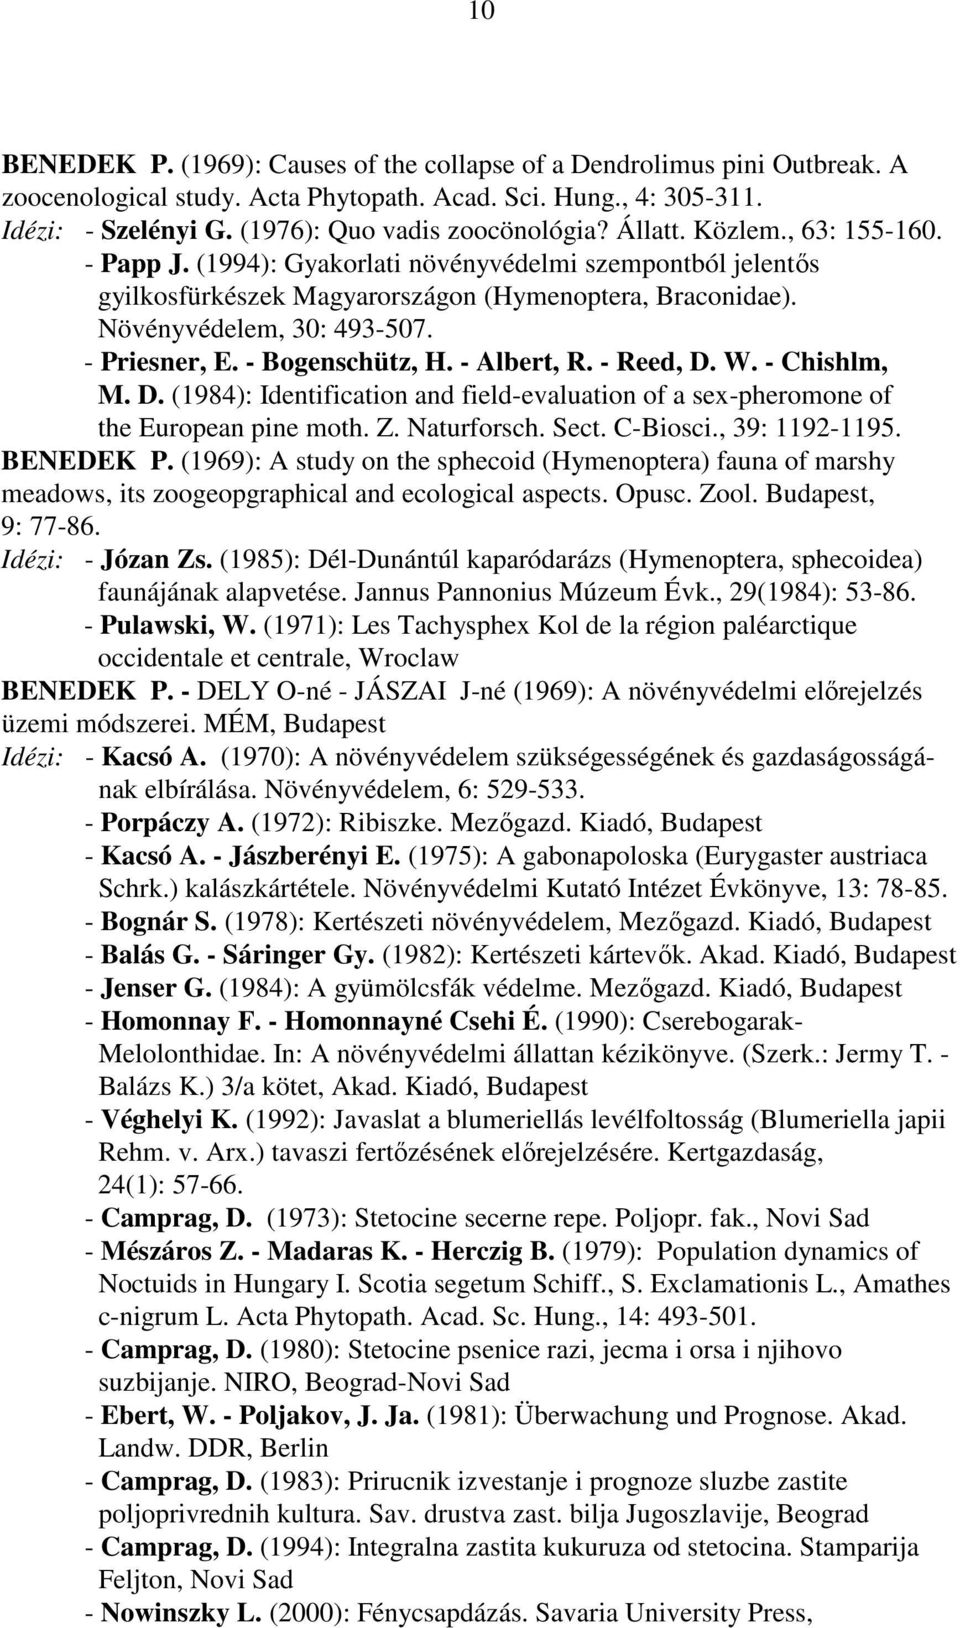 - Bogenschütz, H. - Albert, R. - Reed, D. W. - Chishlm, M. D. (1984): Identification and field-evaluation of a sex-pheromone of the European pine moth. Z. Naturforsch. Sect. C-Biosci., 39: 1192-1195.